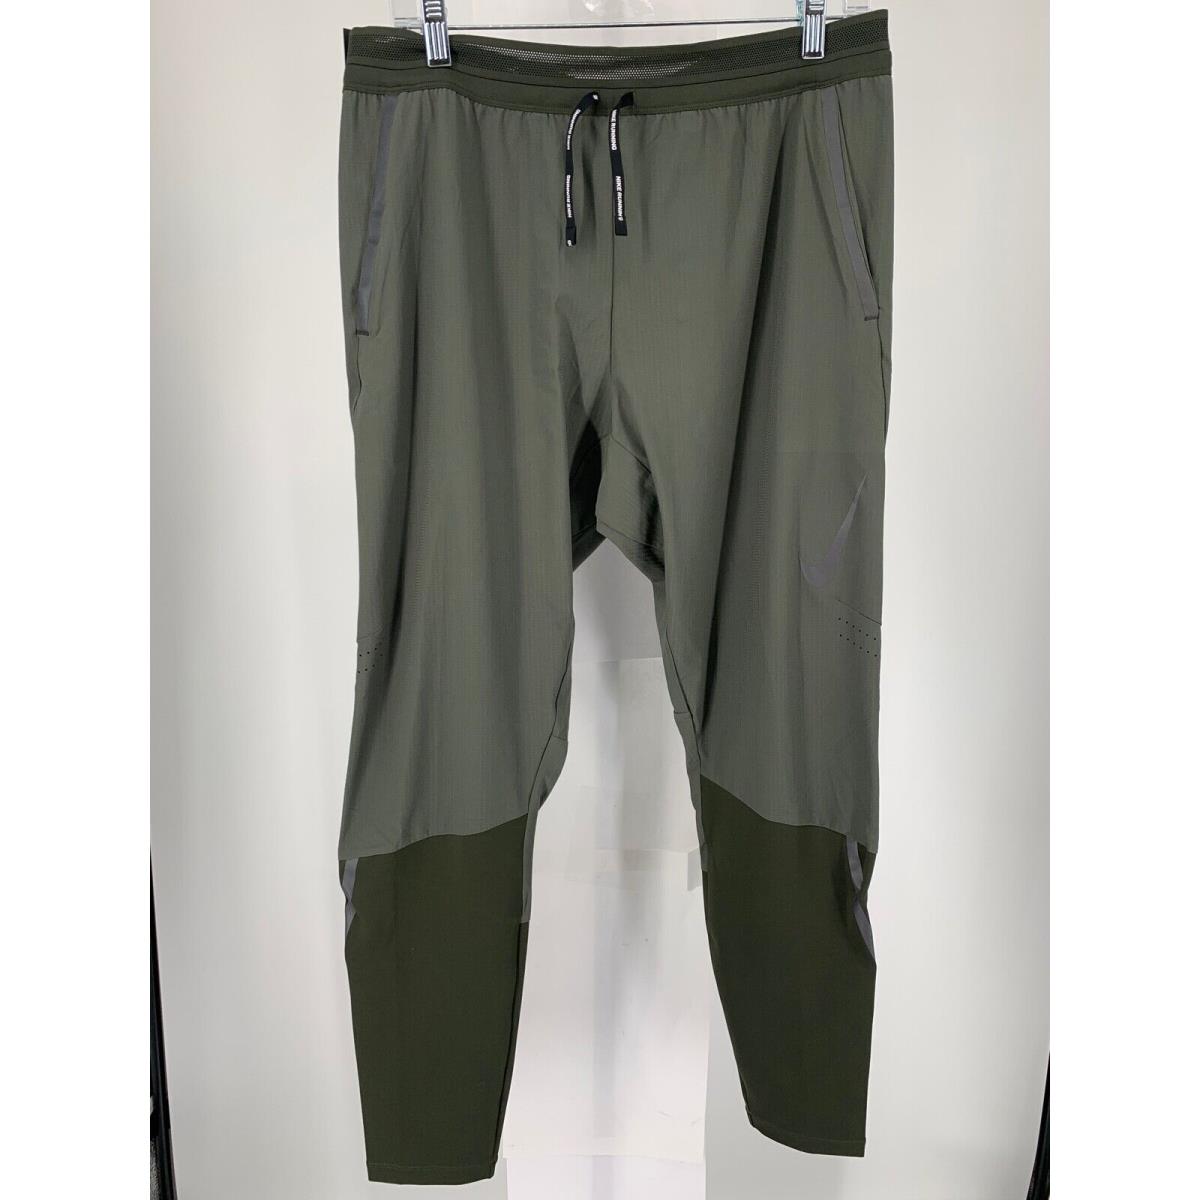 Nike Men Swift Flex Running Pants Green Sequoia BV4809 355 Large